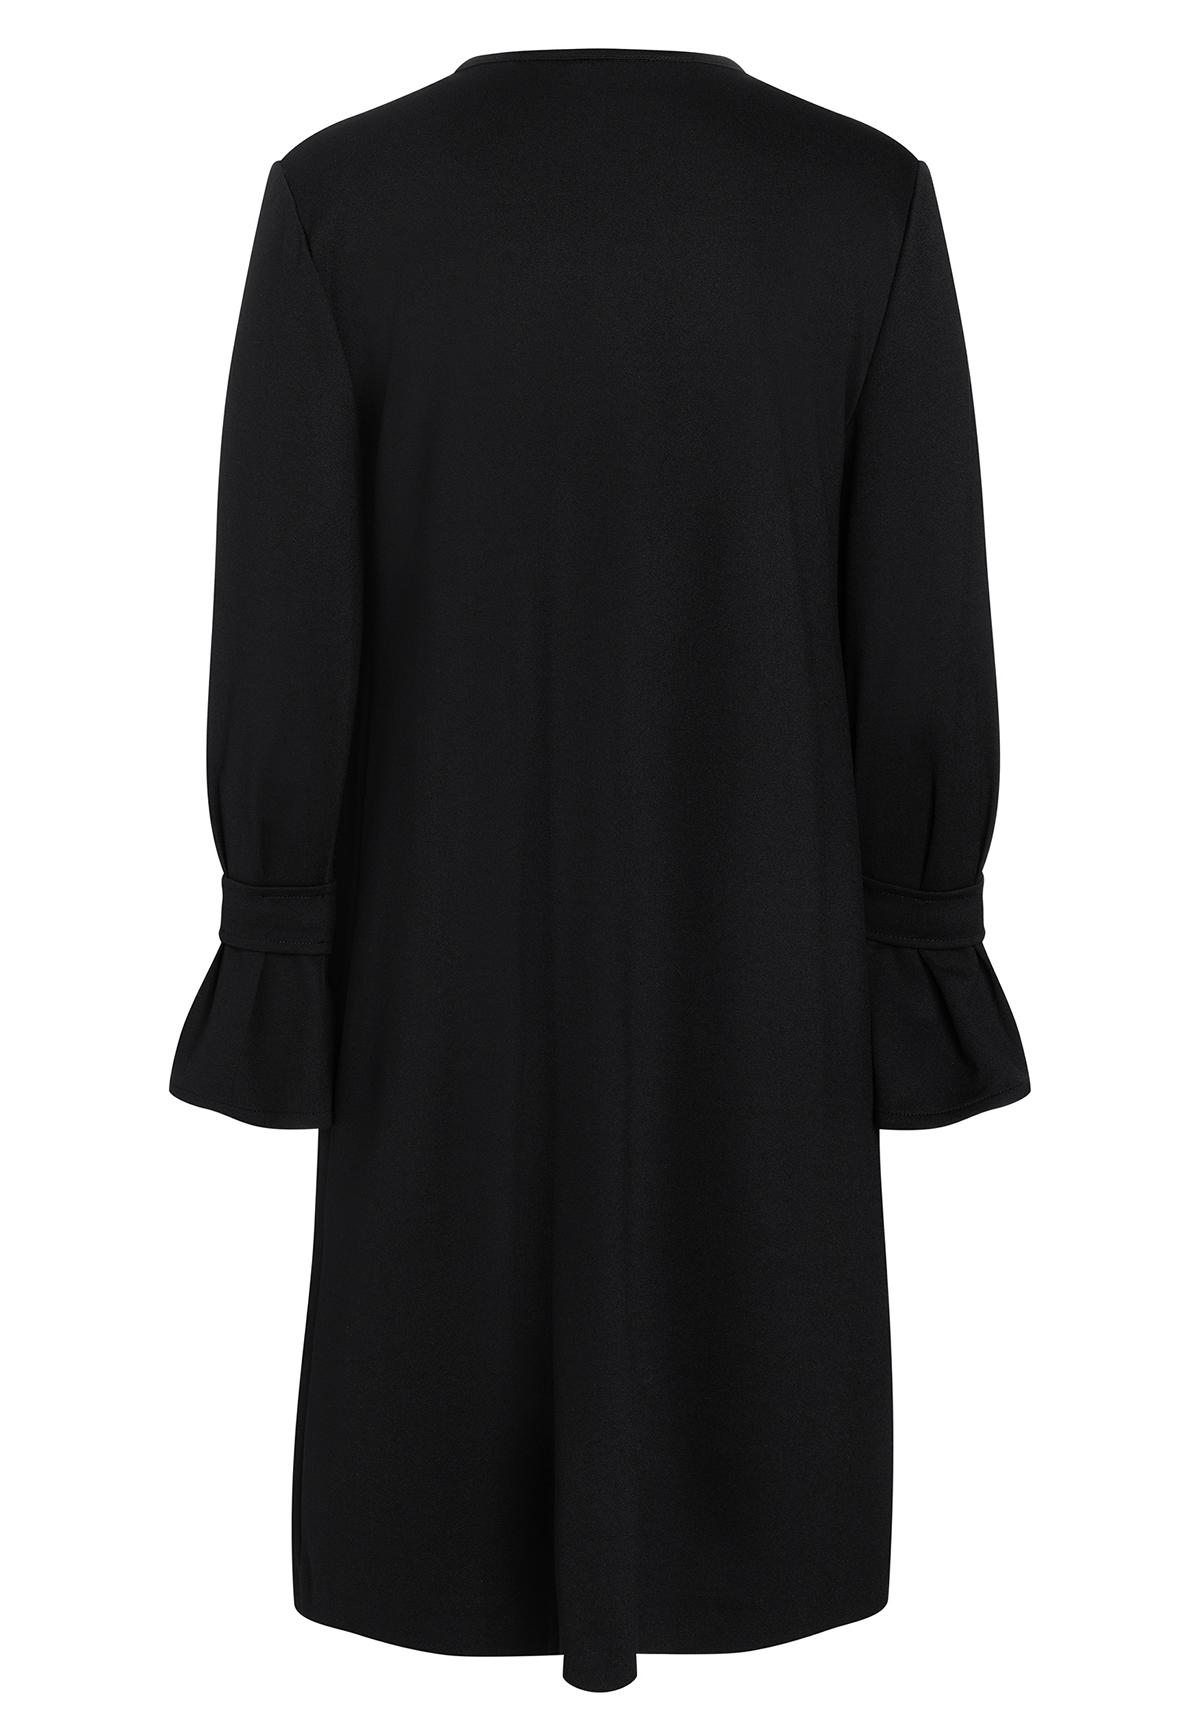 Wide dress Ekala in black with sleeve buckles | Ana Alcazar